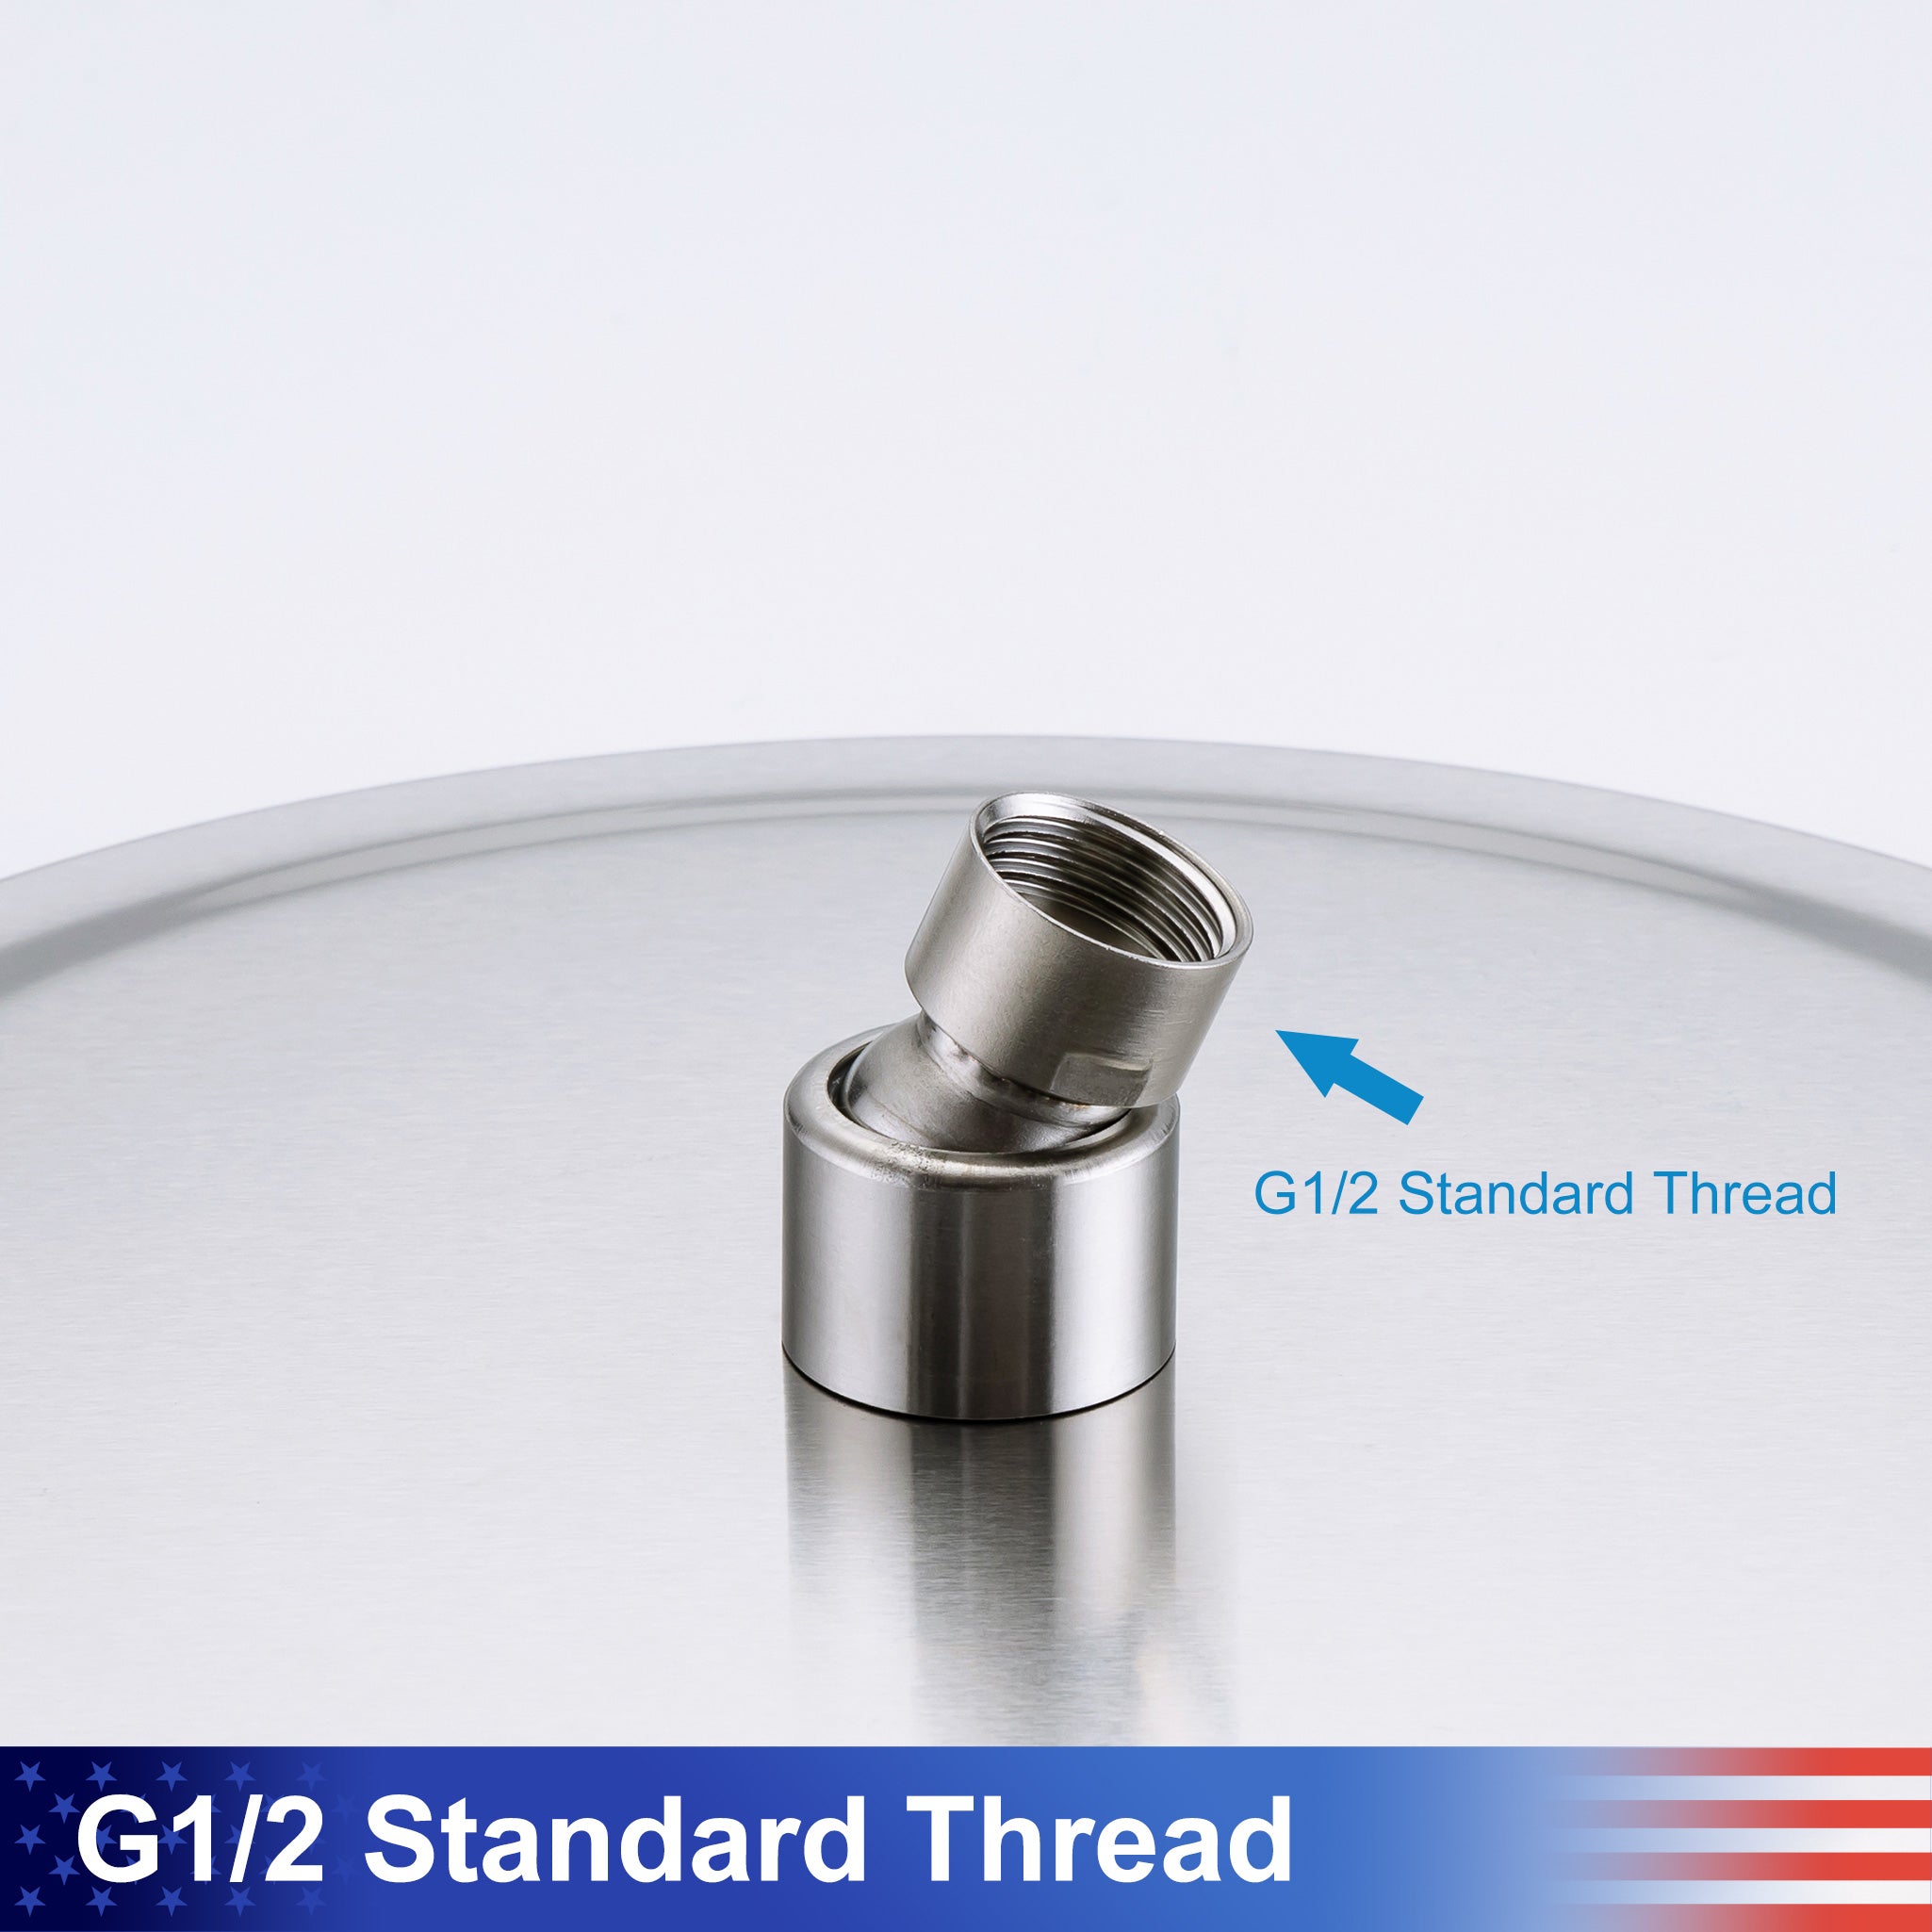 12" Round Rain Fixed Shower Head 1.8 GPM D3-12